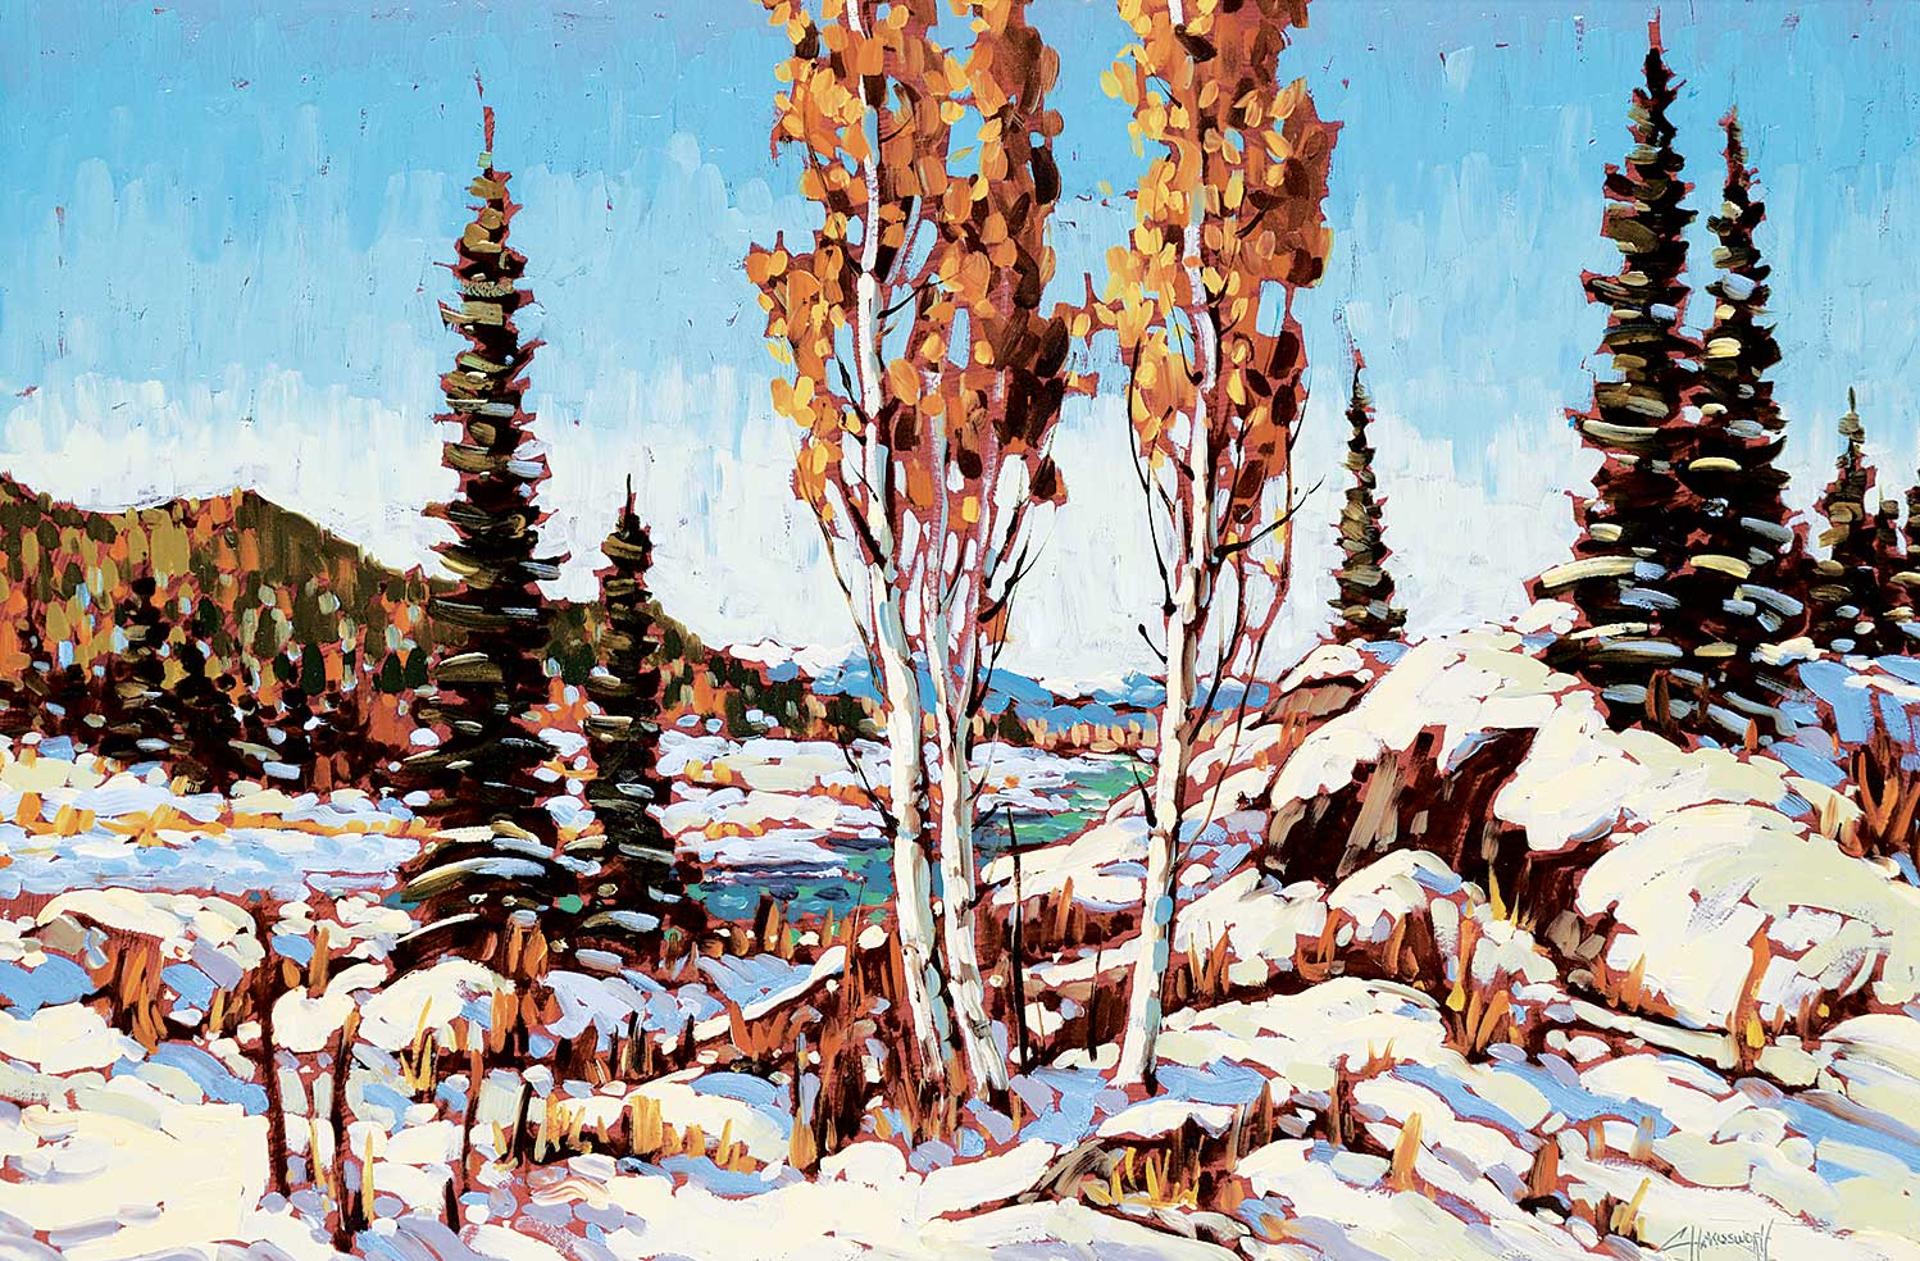 Rod Charlesworth (1955) - Untitled - Winter Looking West